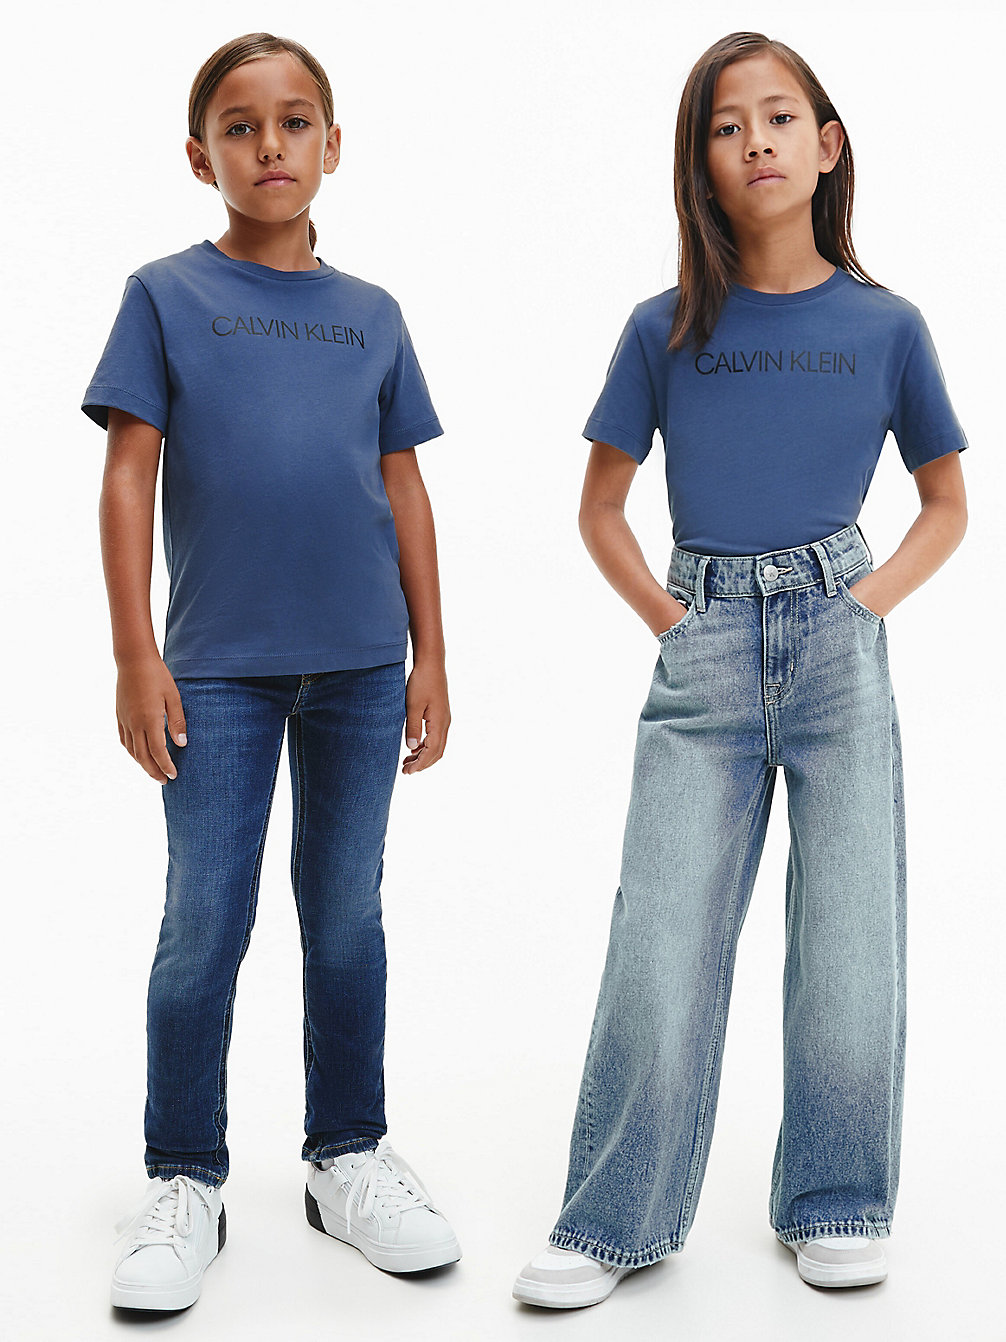 AEGEAN SEA Unisex Organic Cotton Logo T-Shirt undefined kids unisex Calvin Klein